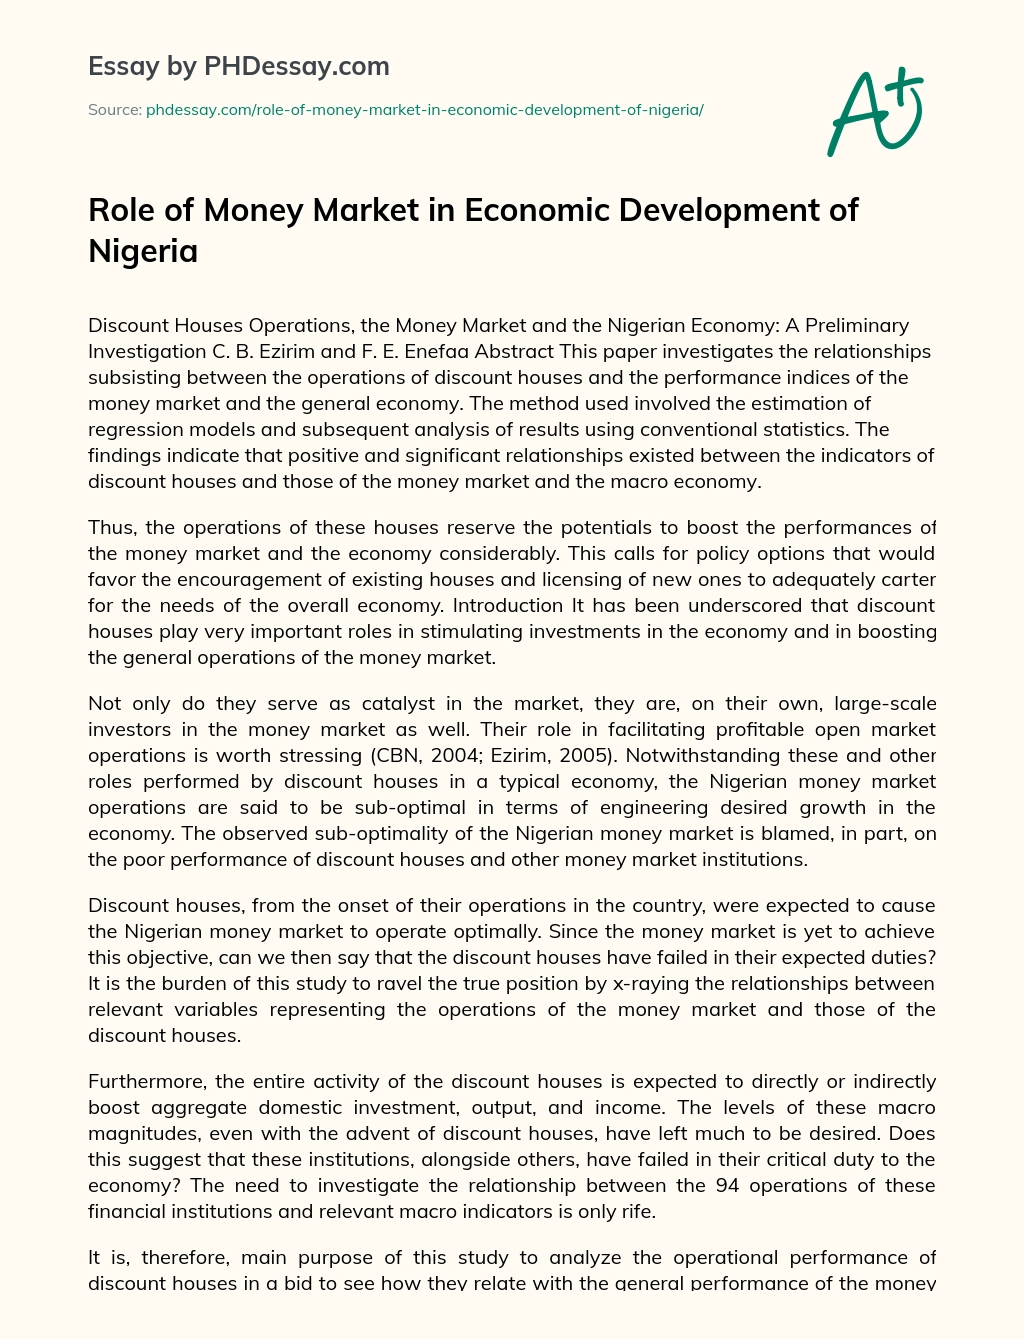 Role of Money Market in Economic Development of Nigeria essay